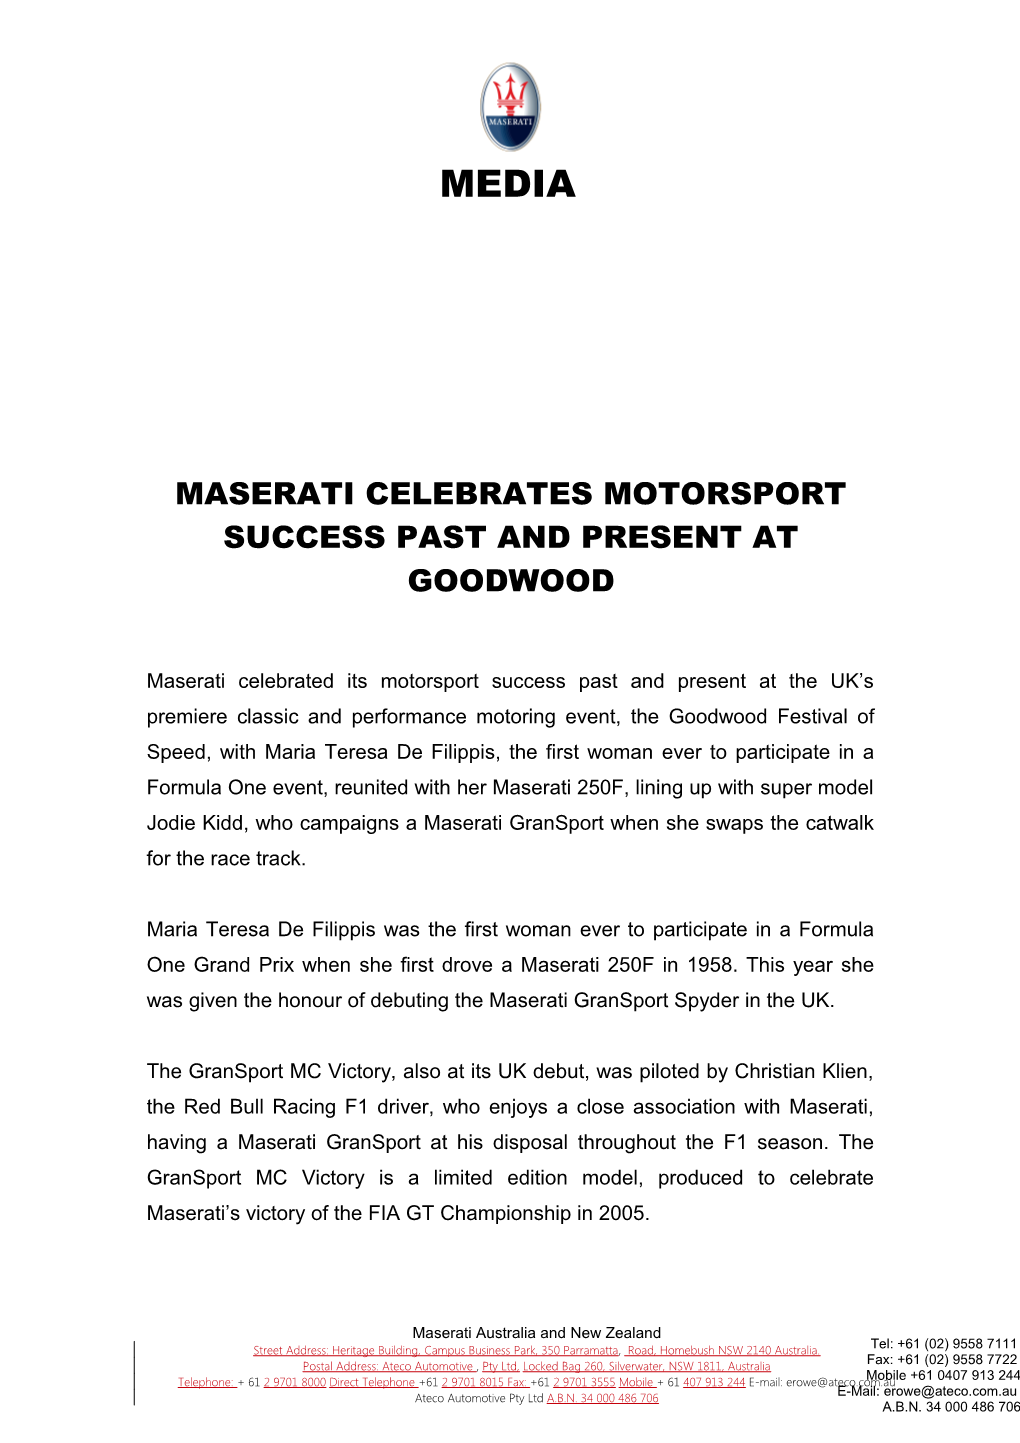 Maserati Celebrates Motorsport Success Past and Present at Goodwood